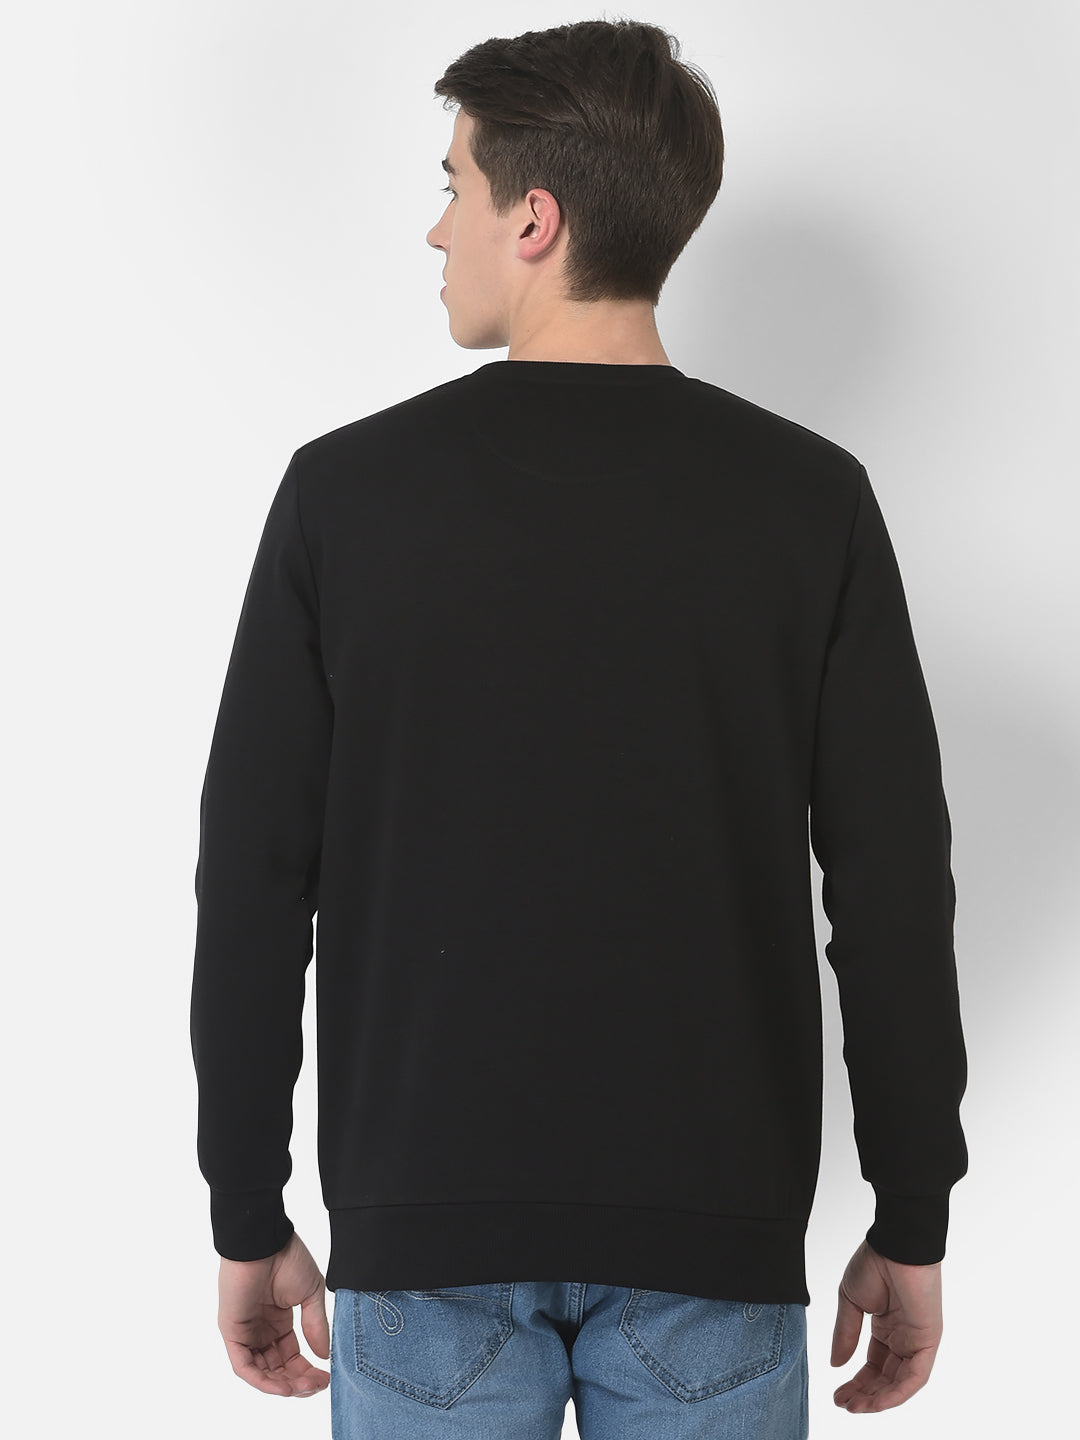 Cobb Black Printed Round Neck Sweatshirt